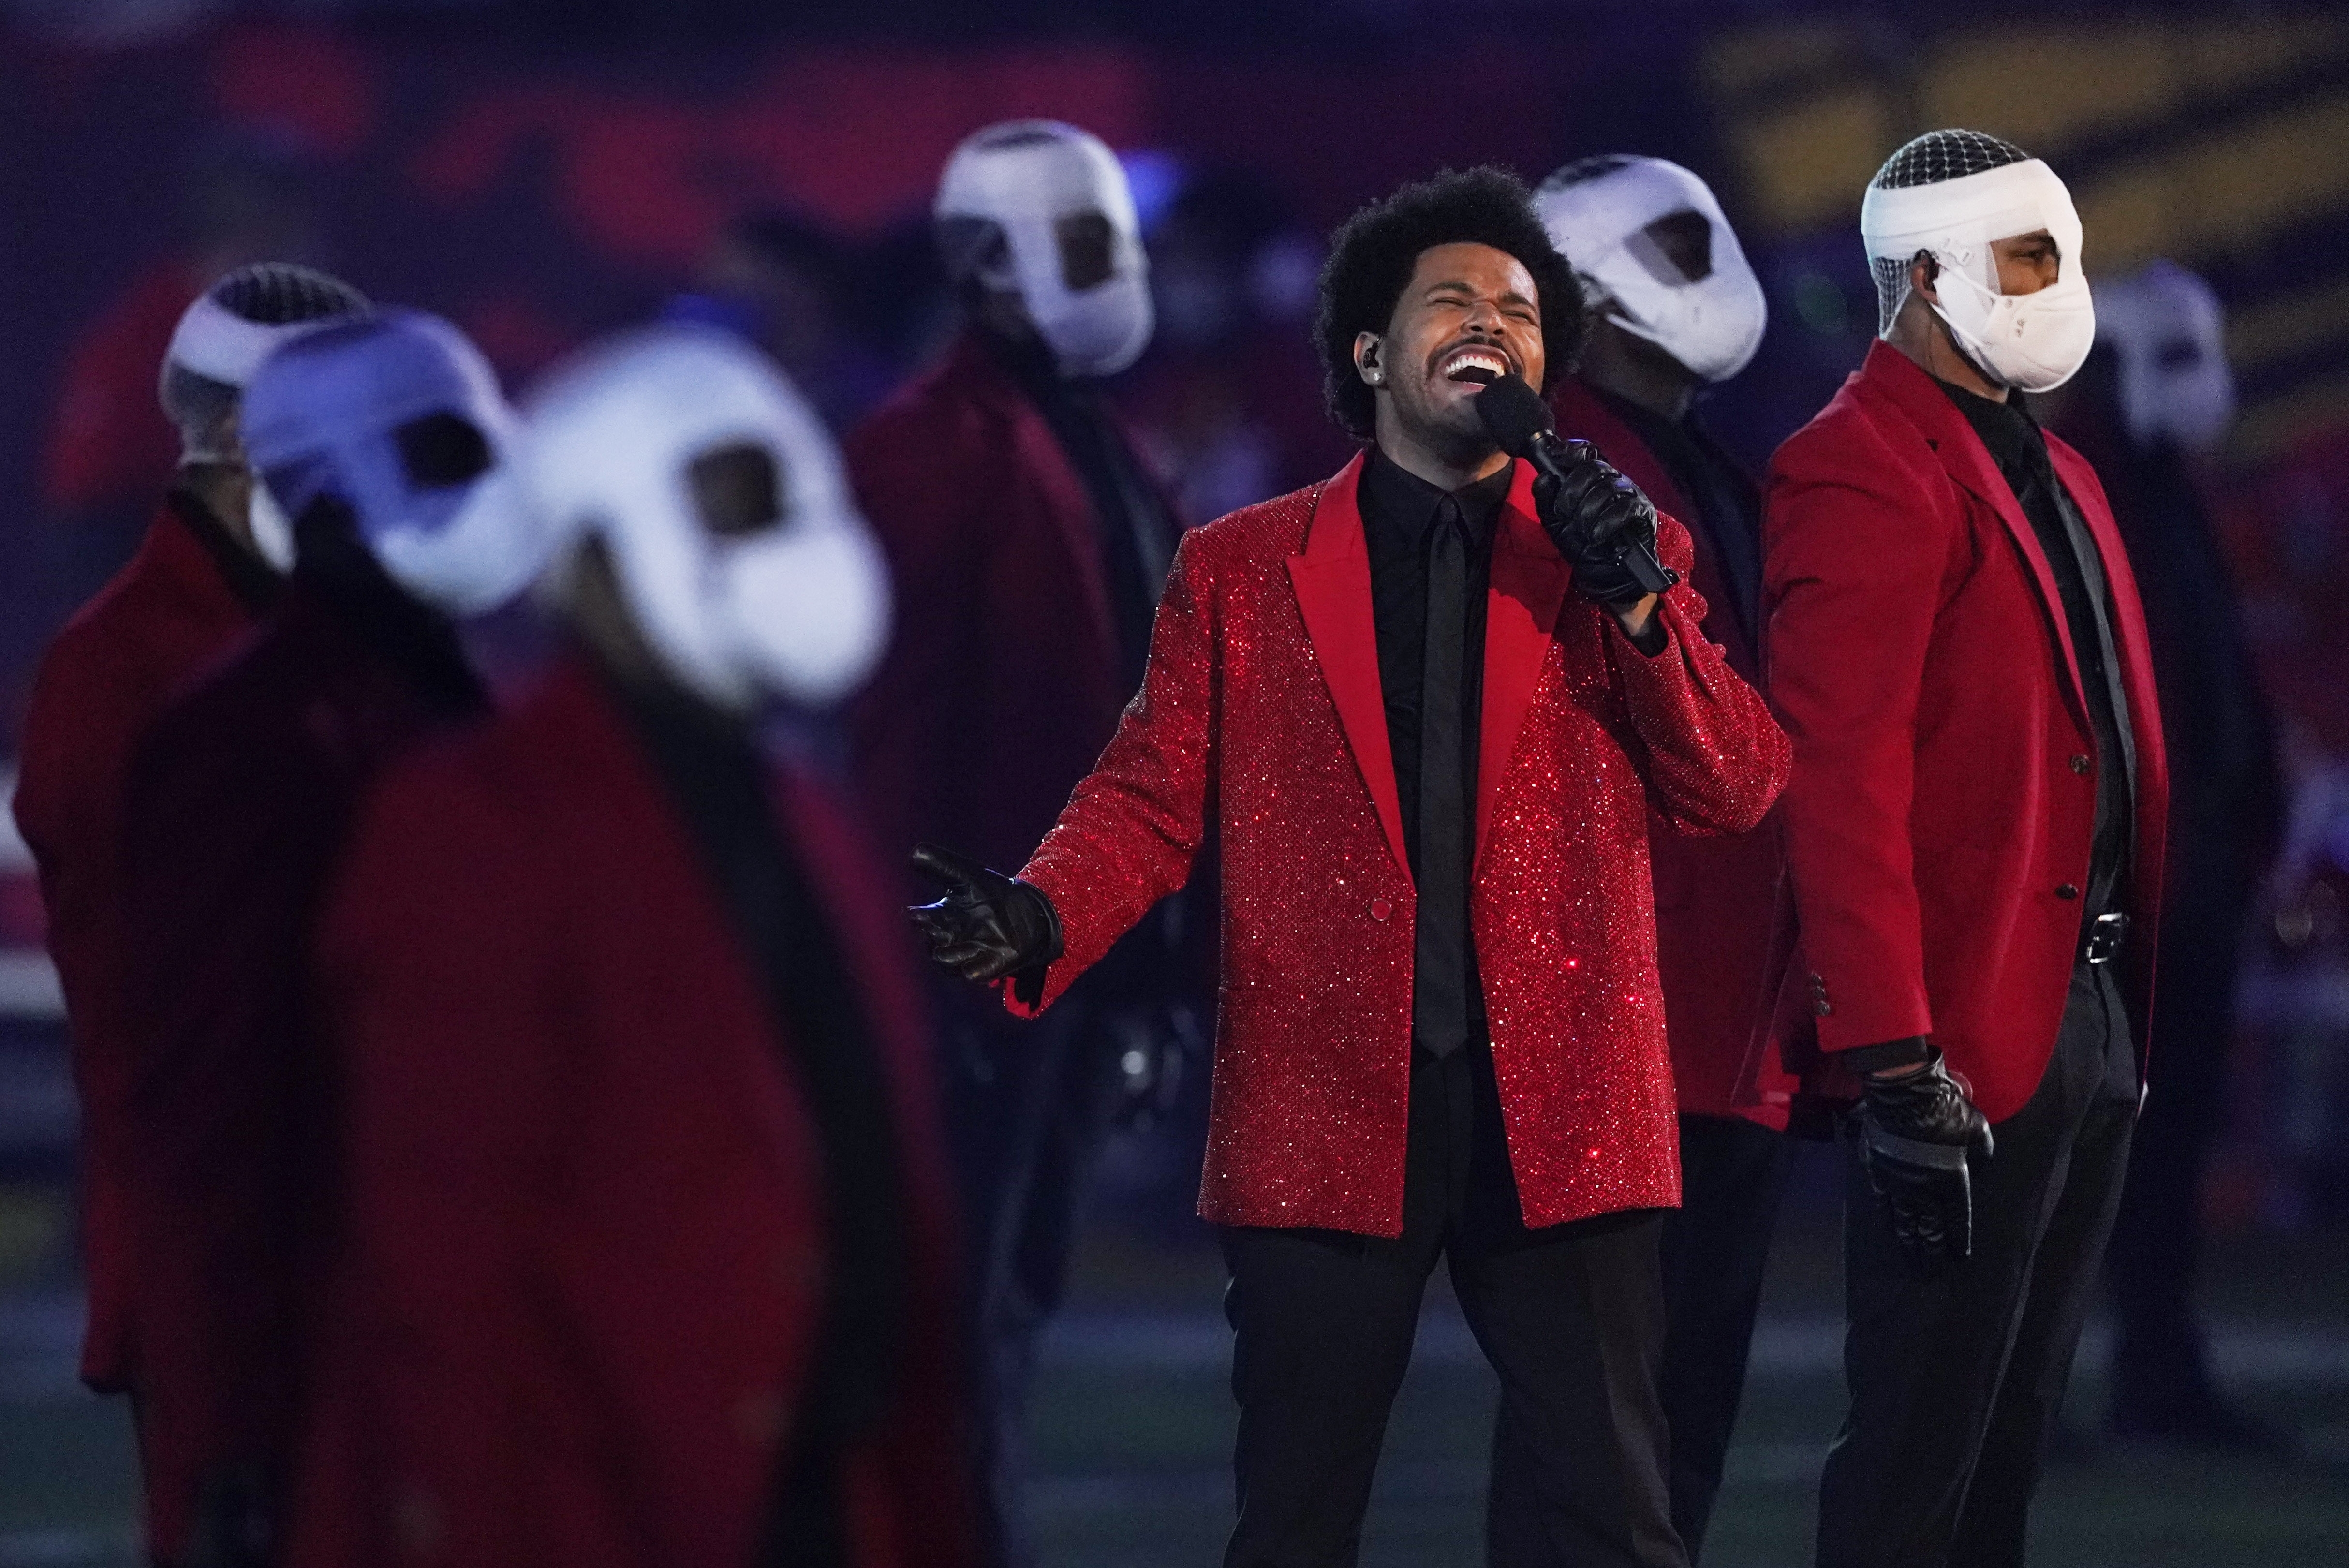 Weeknd Super Bowl show details